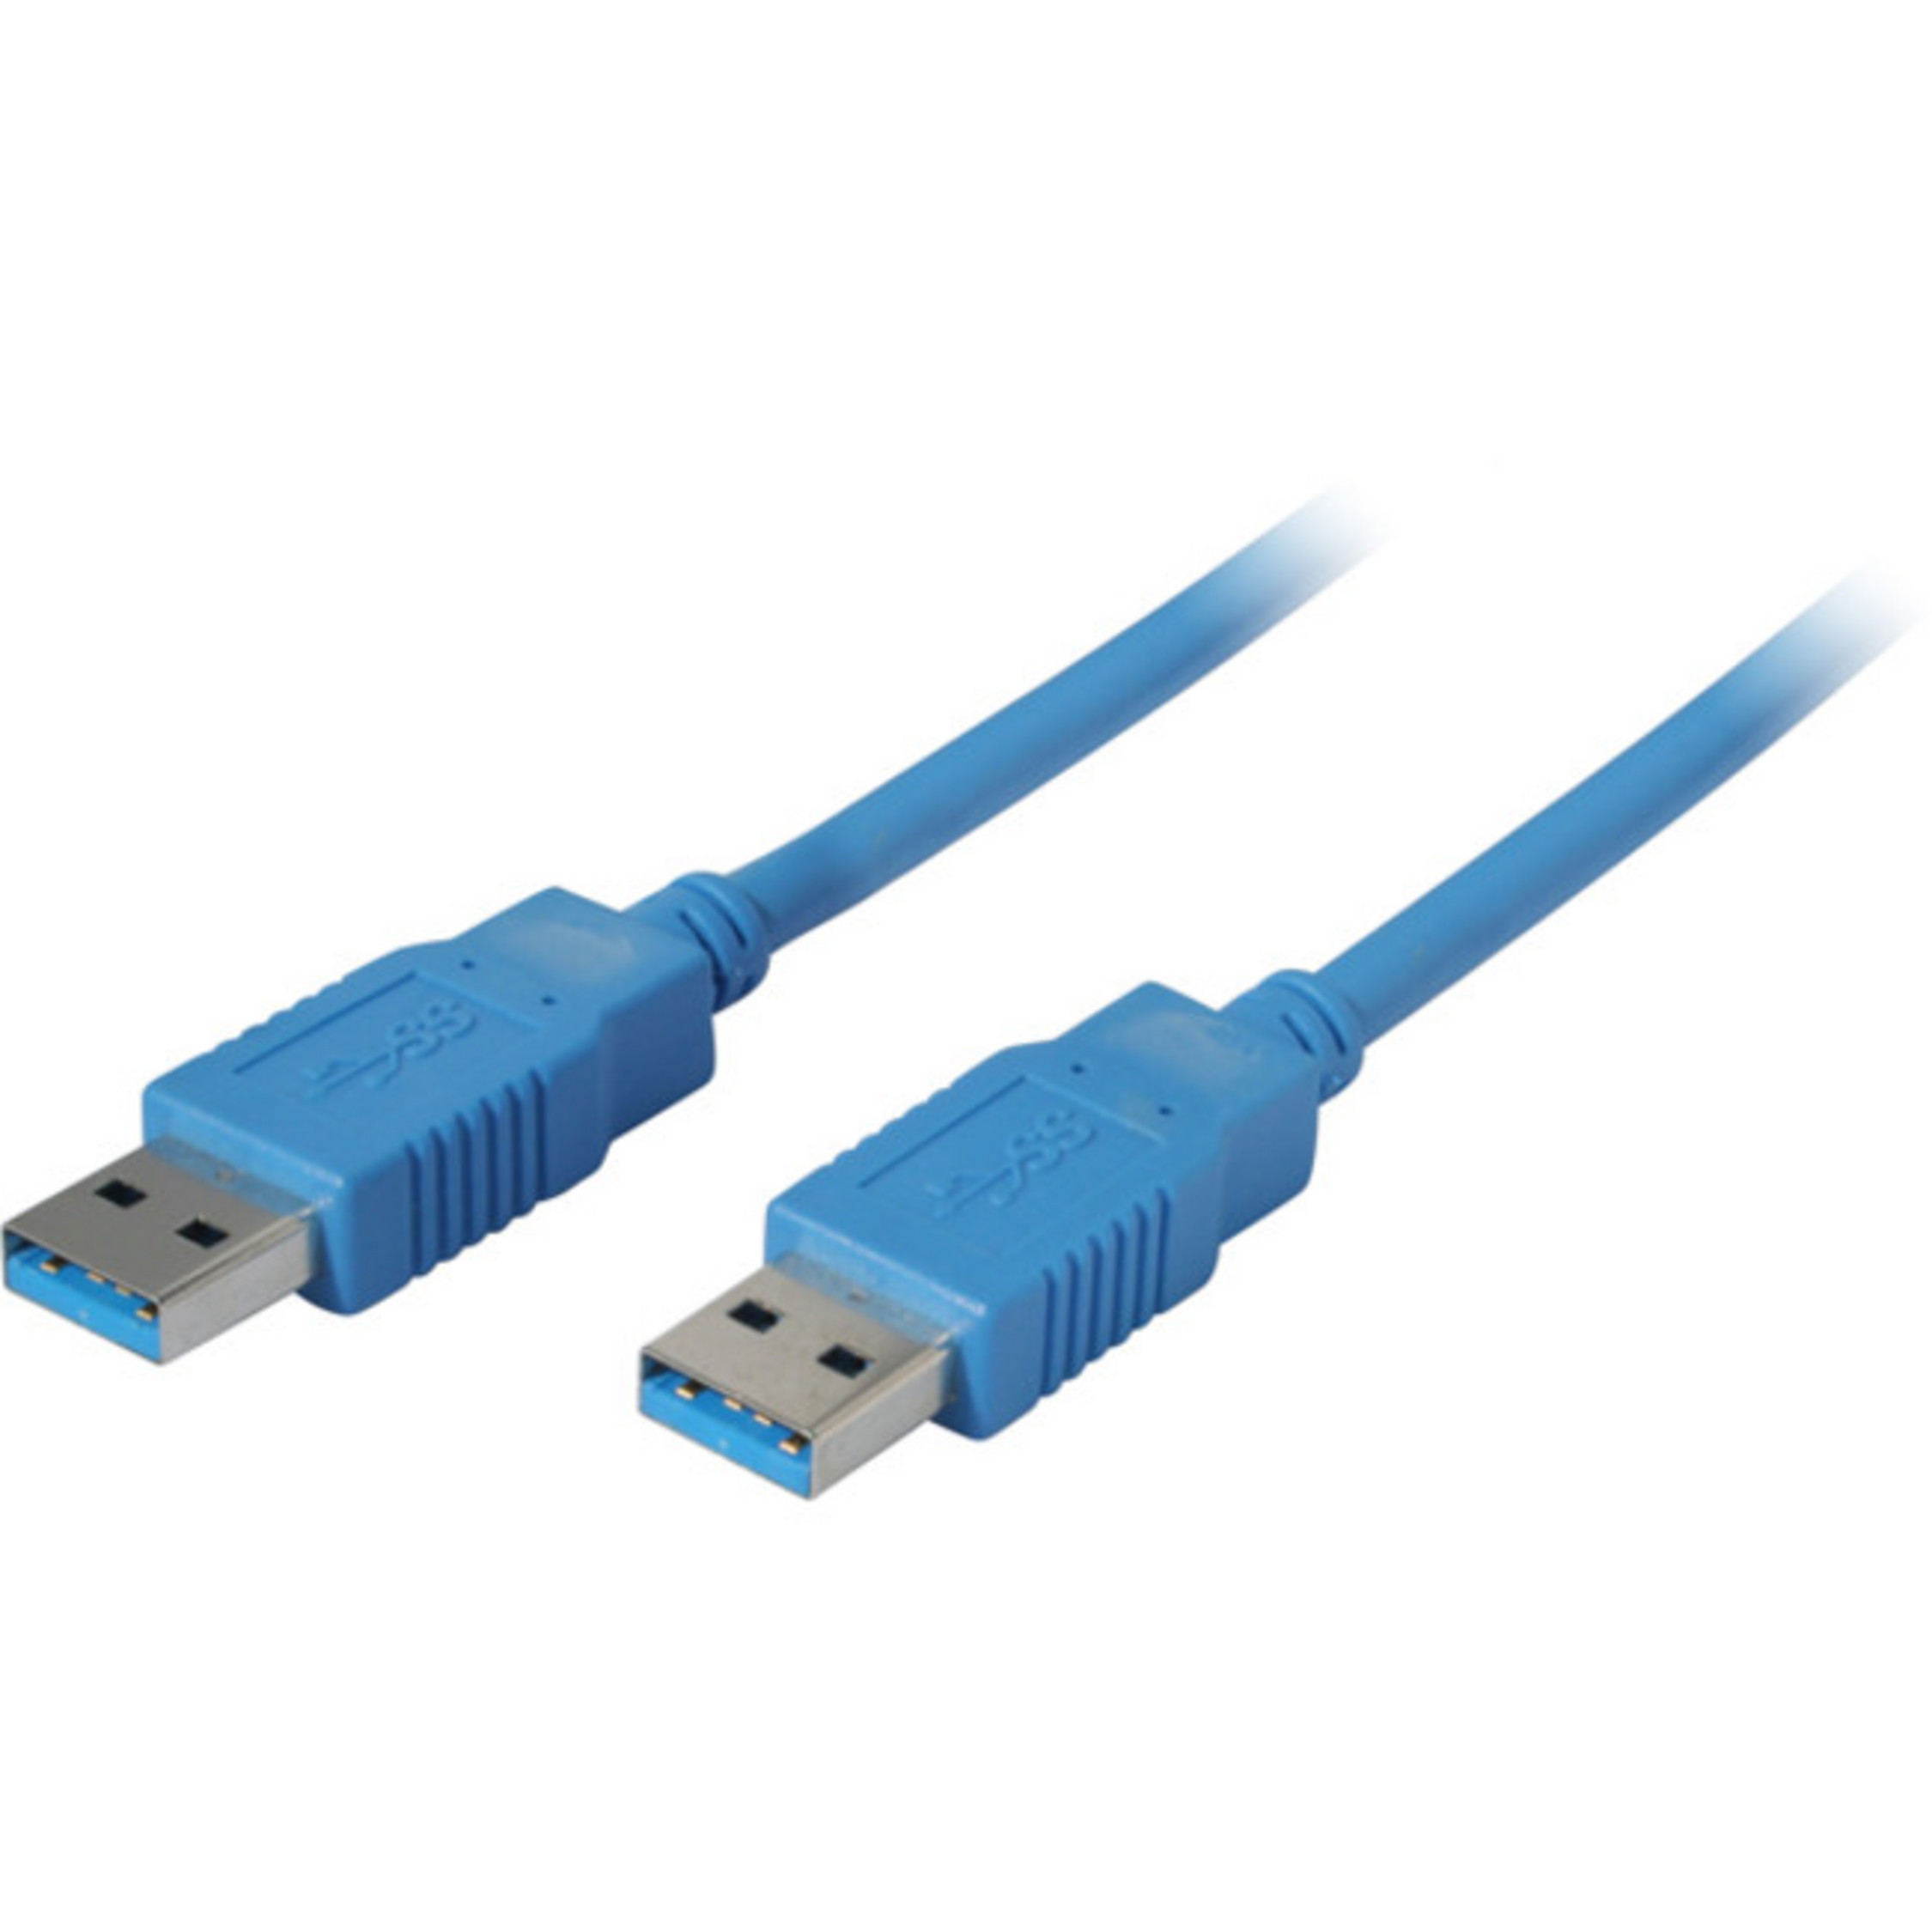 S/CONN MAXIMUM CONNECTIVITY USB Kabel A A USB blau Stecker USB 3.0 3m Kabel / Stecker